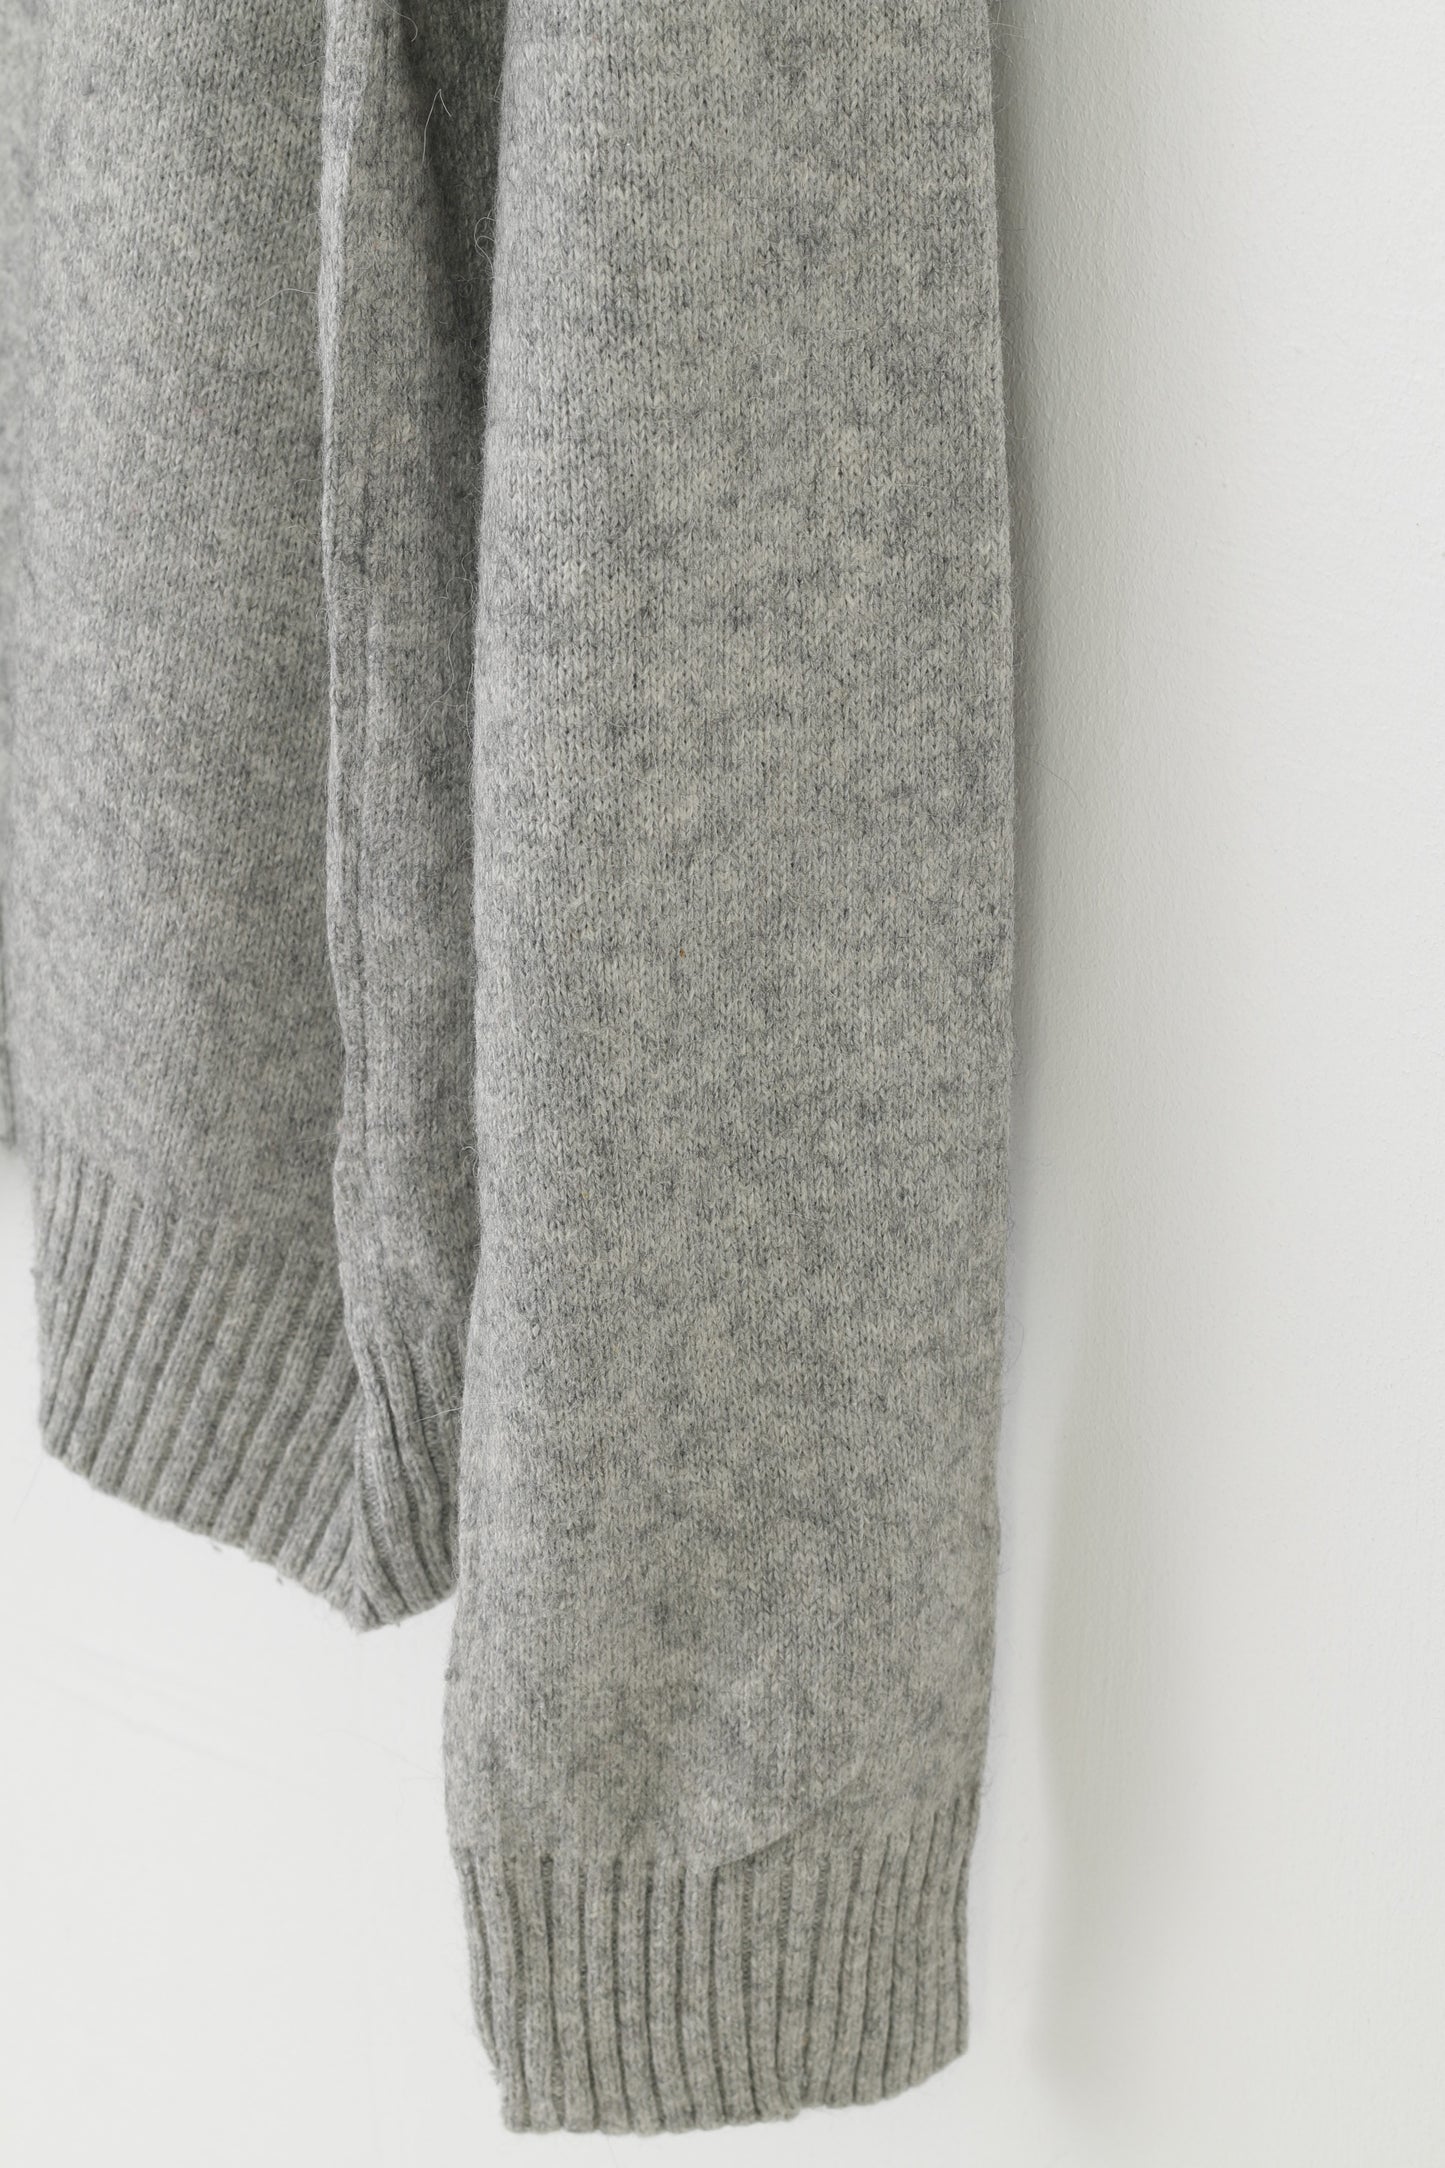 Gant Men XL Jumper Grey Cotton Wool Blend Soft Sweater Zip Neck Collar Vintage Top